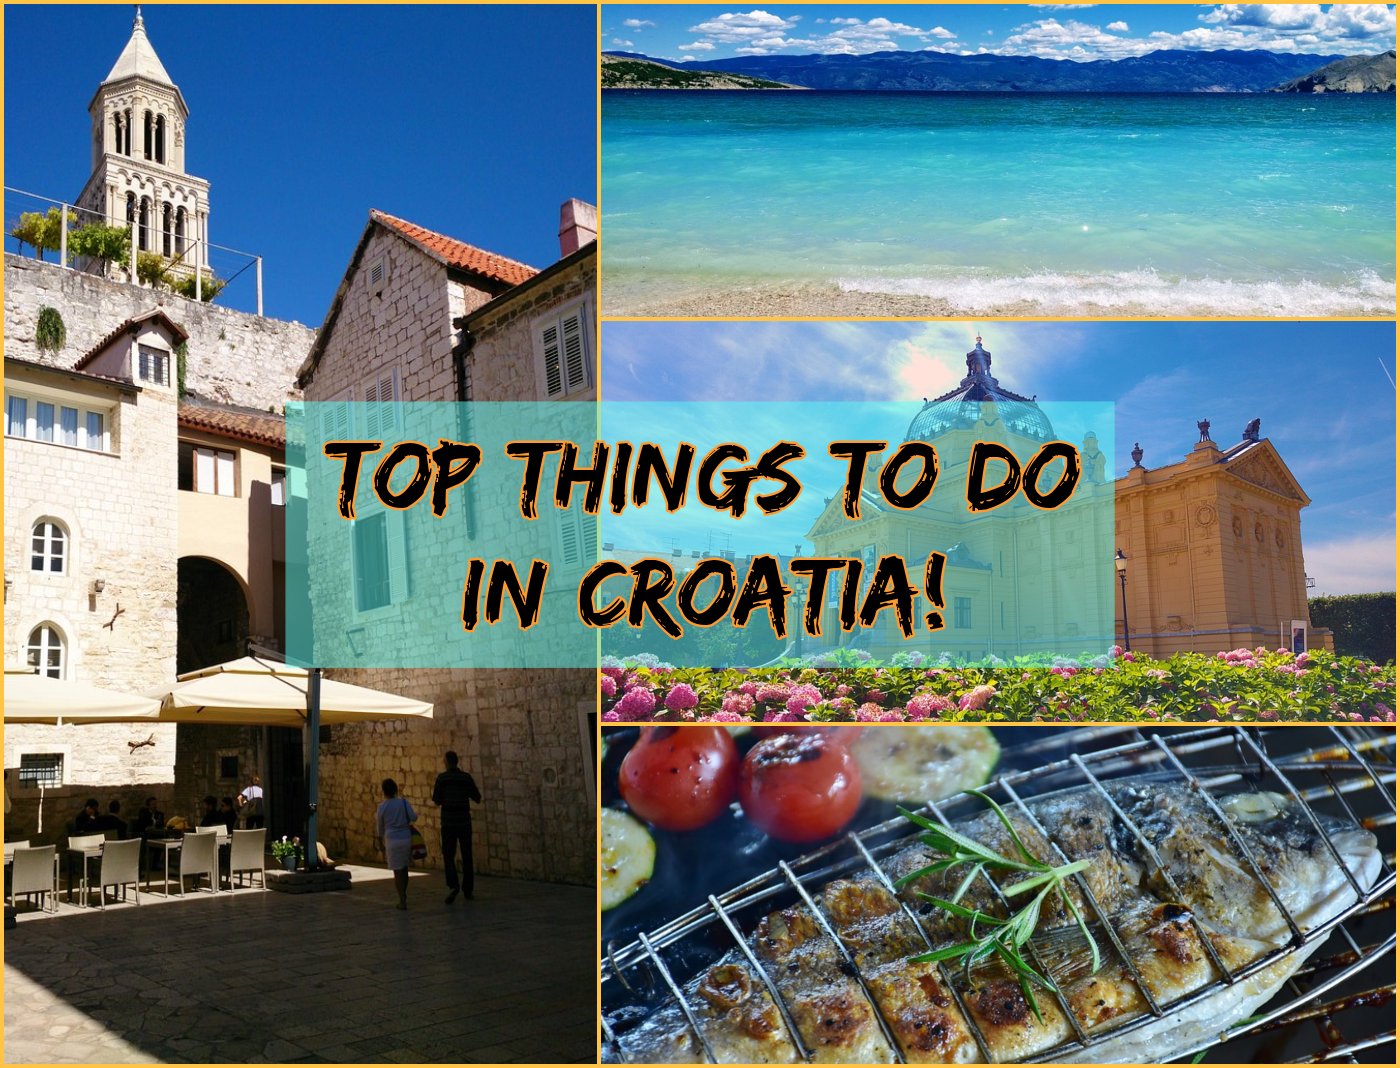 Top things to do in Croatia